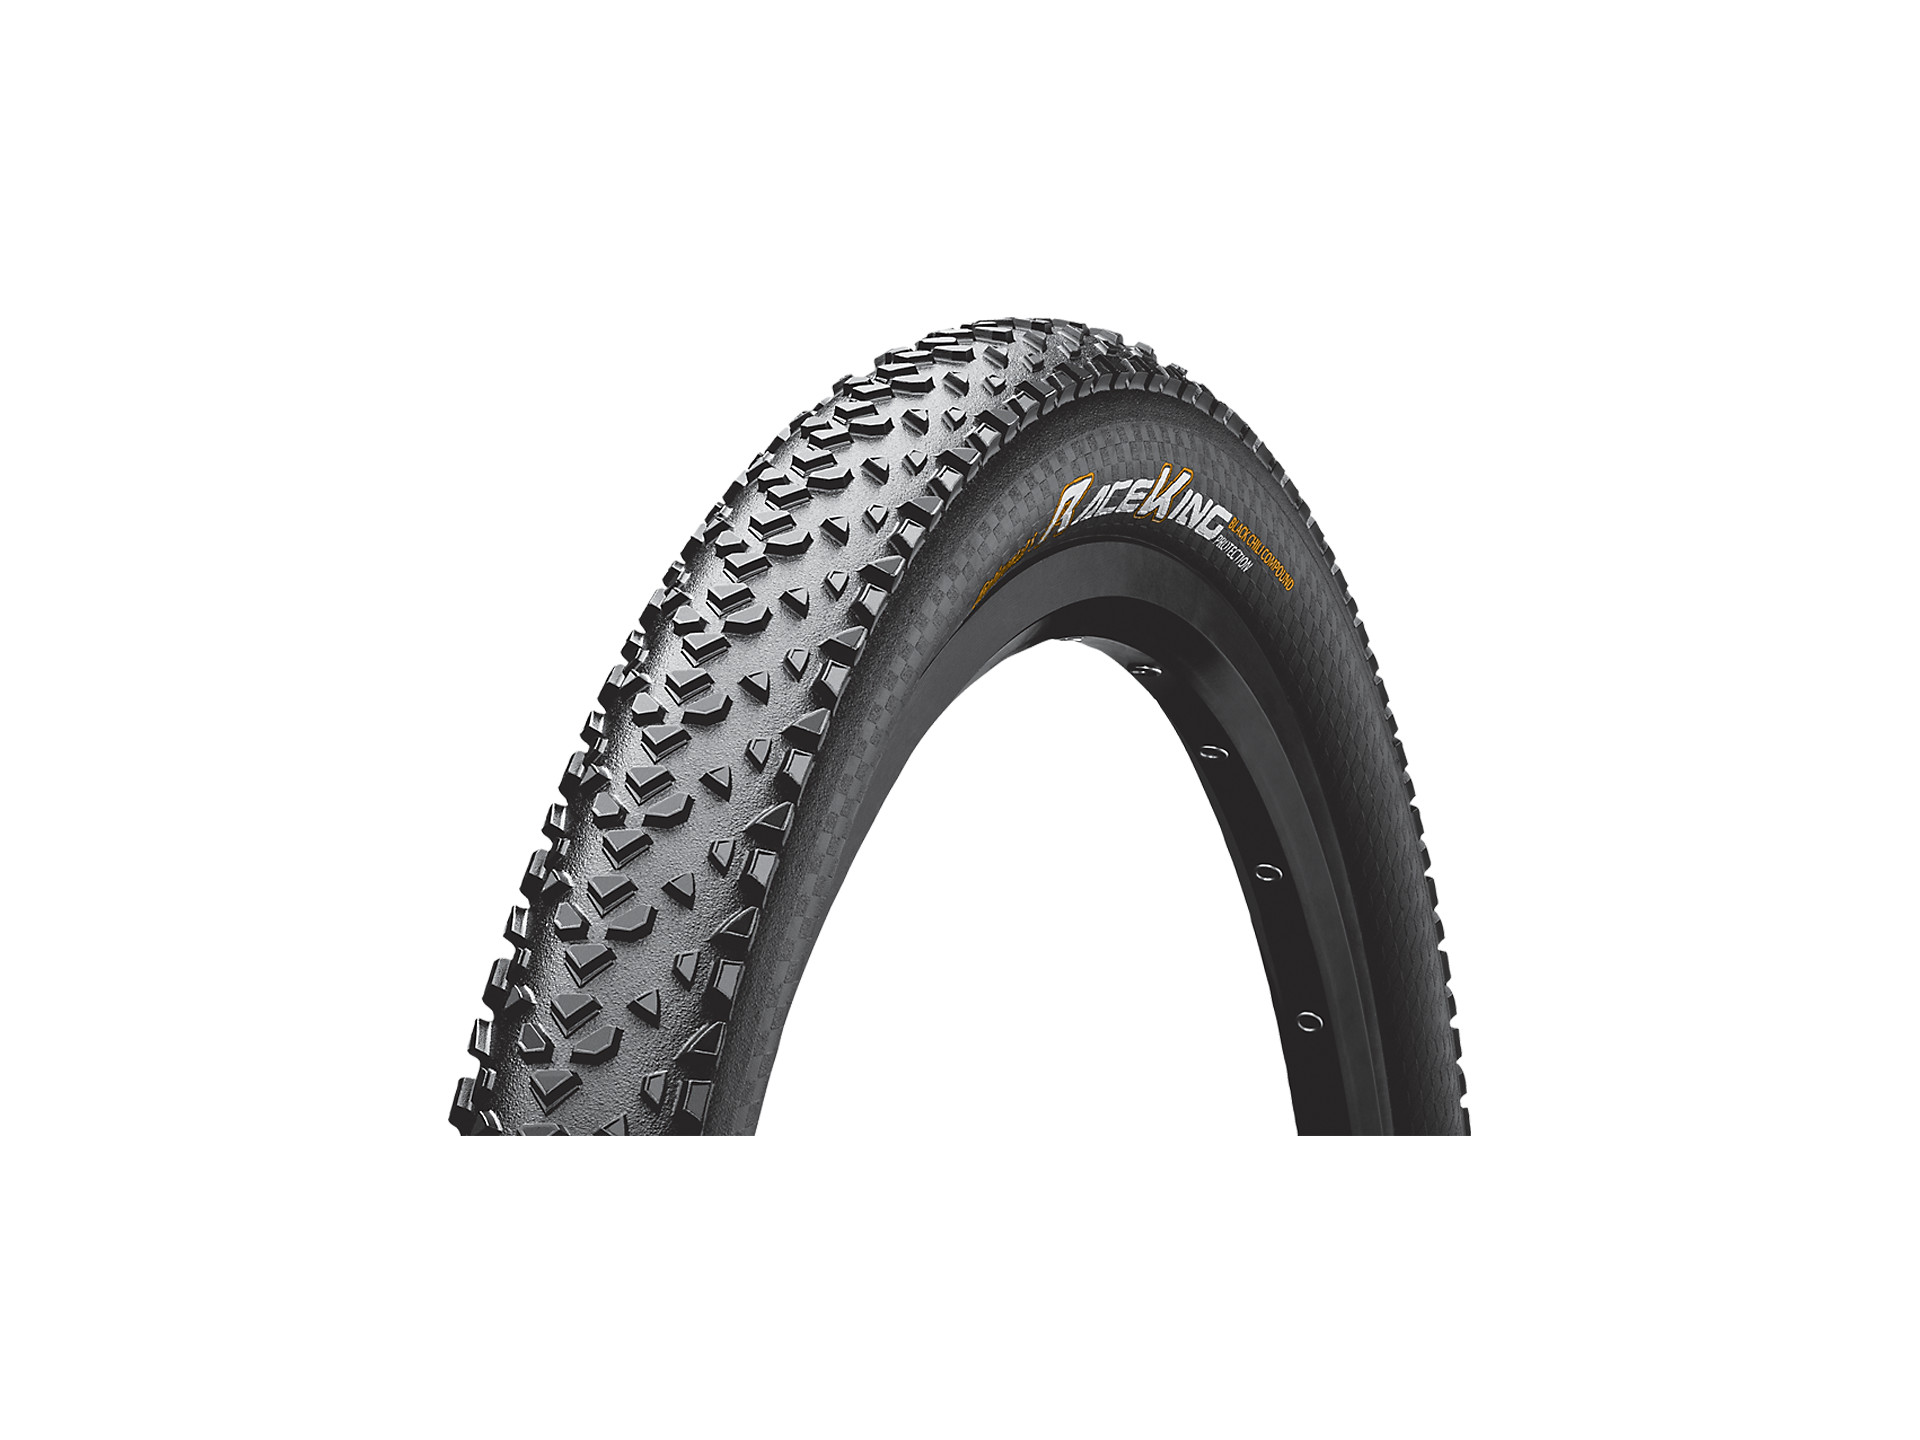 Black Chili Folding Handmade MTB Performance Tire Tubeless 26, 27.5, 29 Continental Mountain Bike ProTection Tire